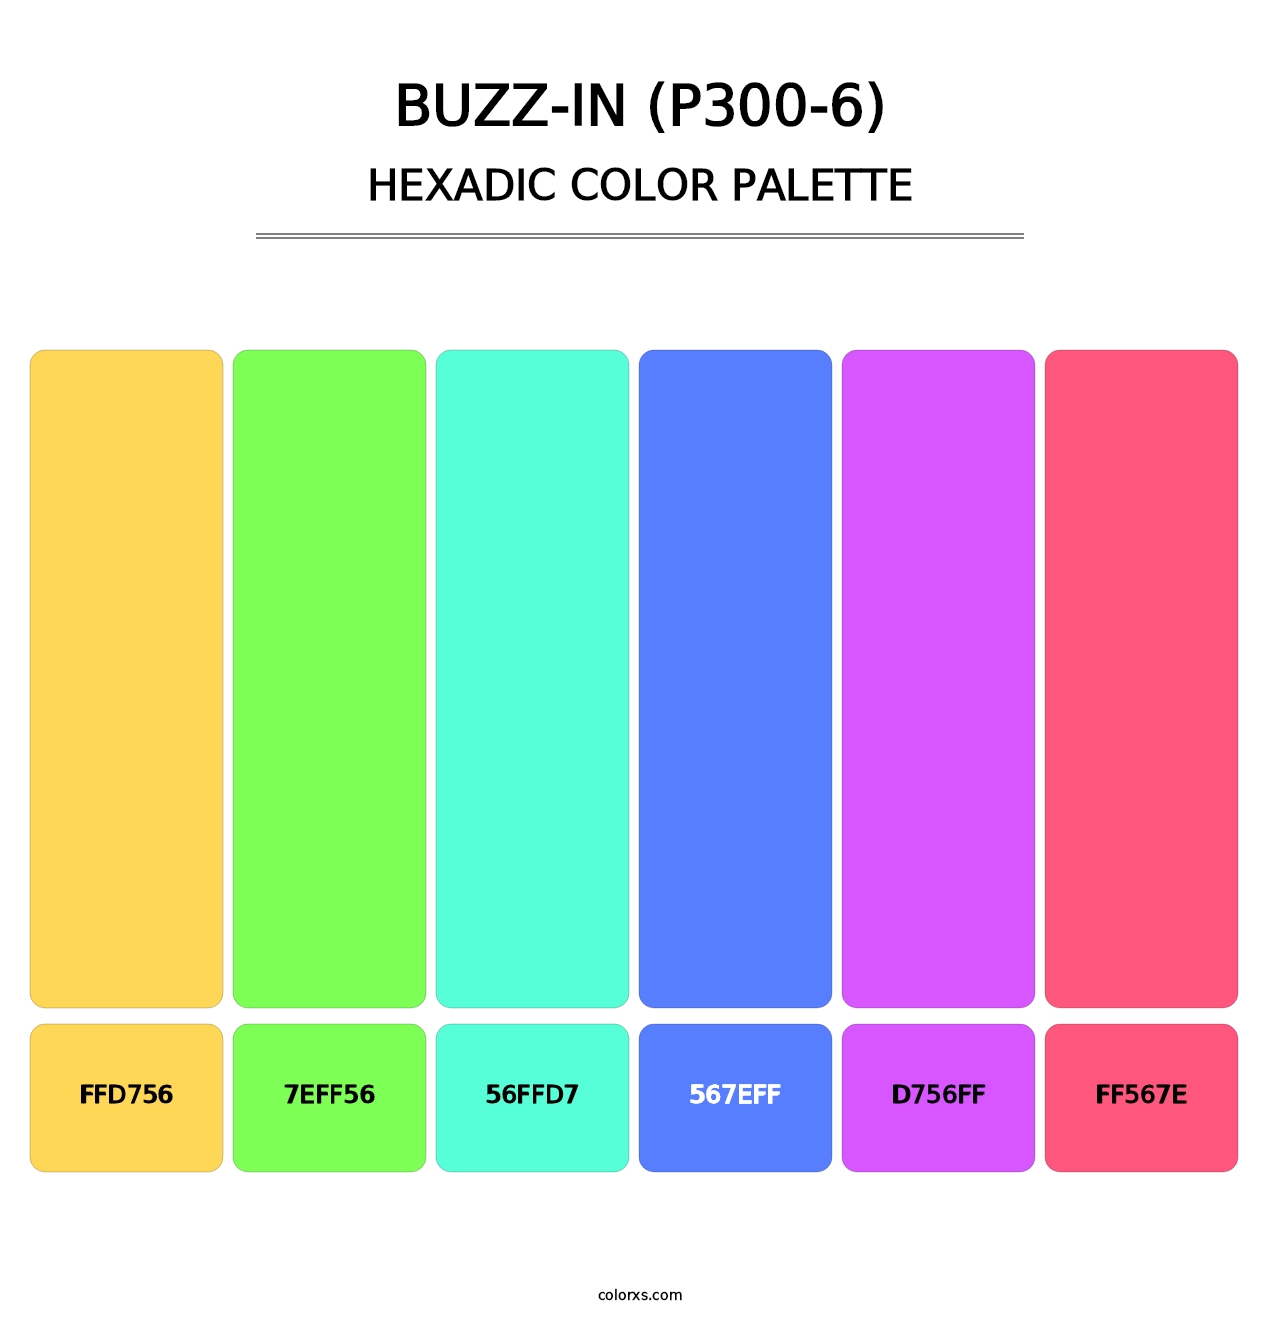 Buzz-In (P300-6) - Hexadic Color Palette